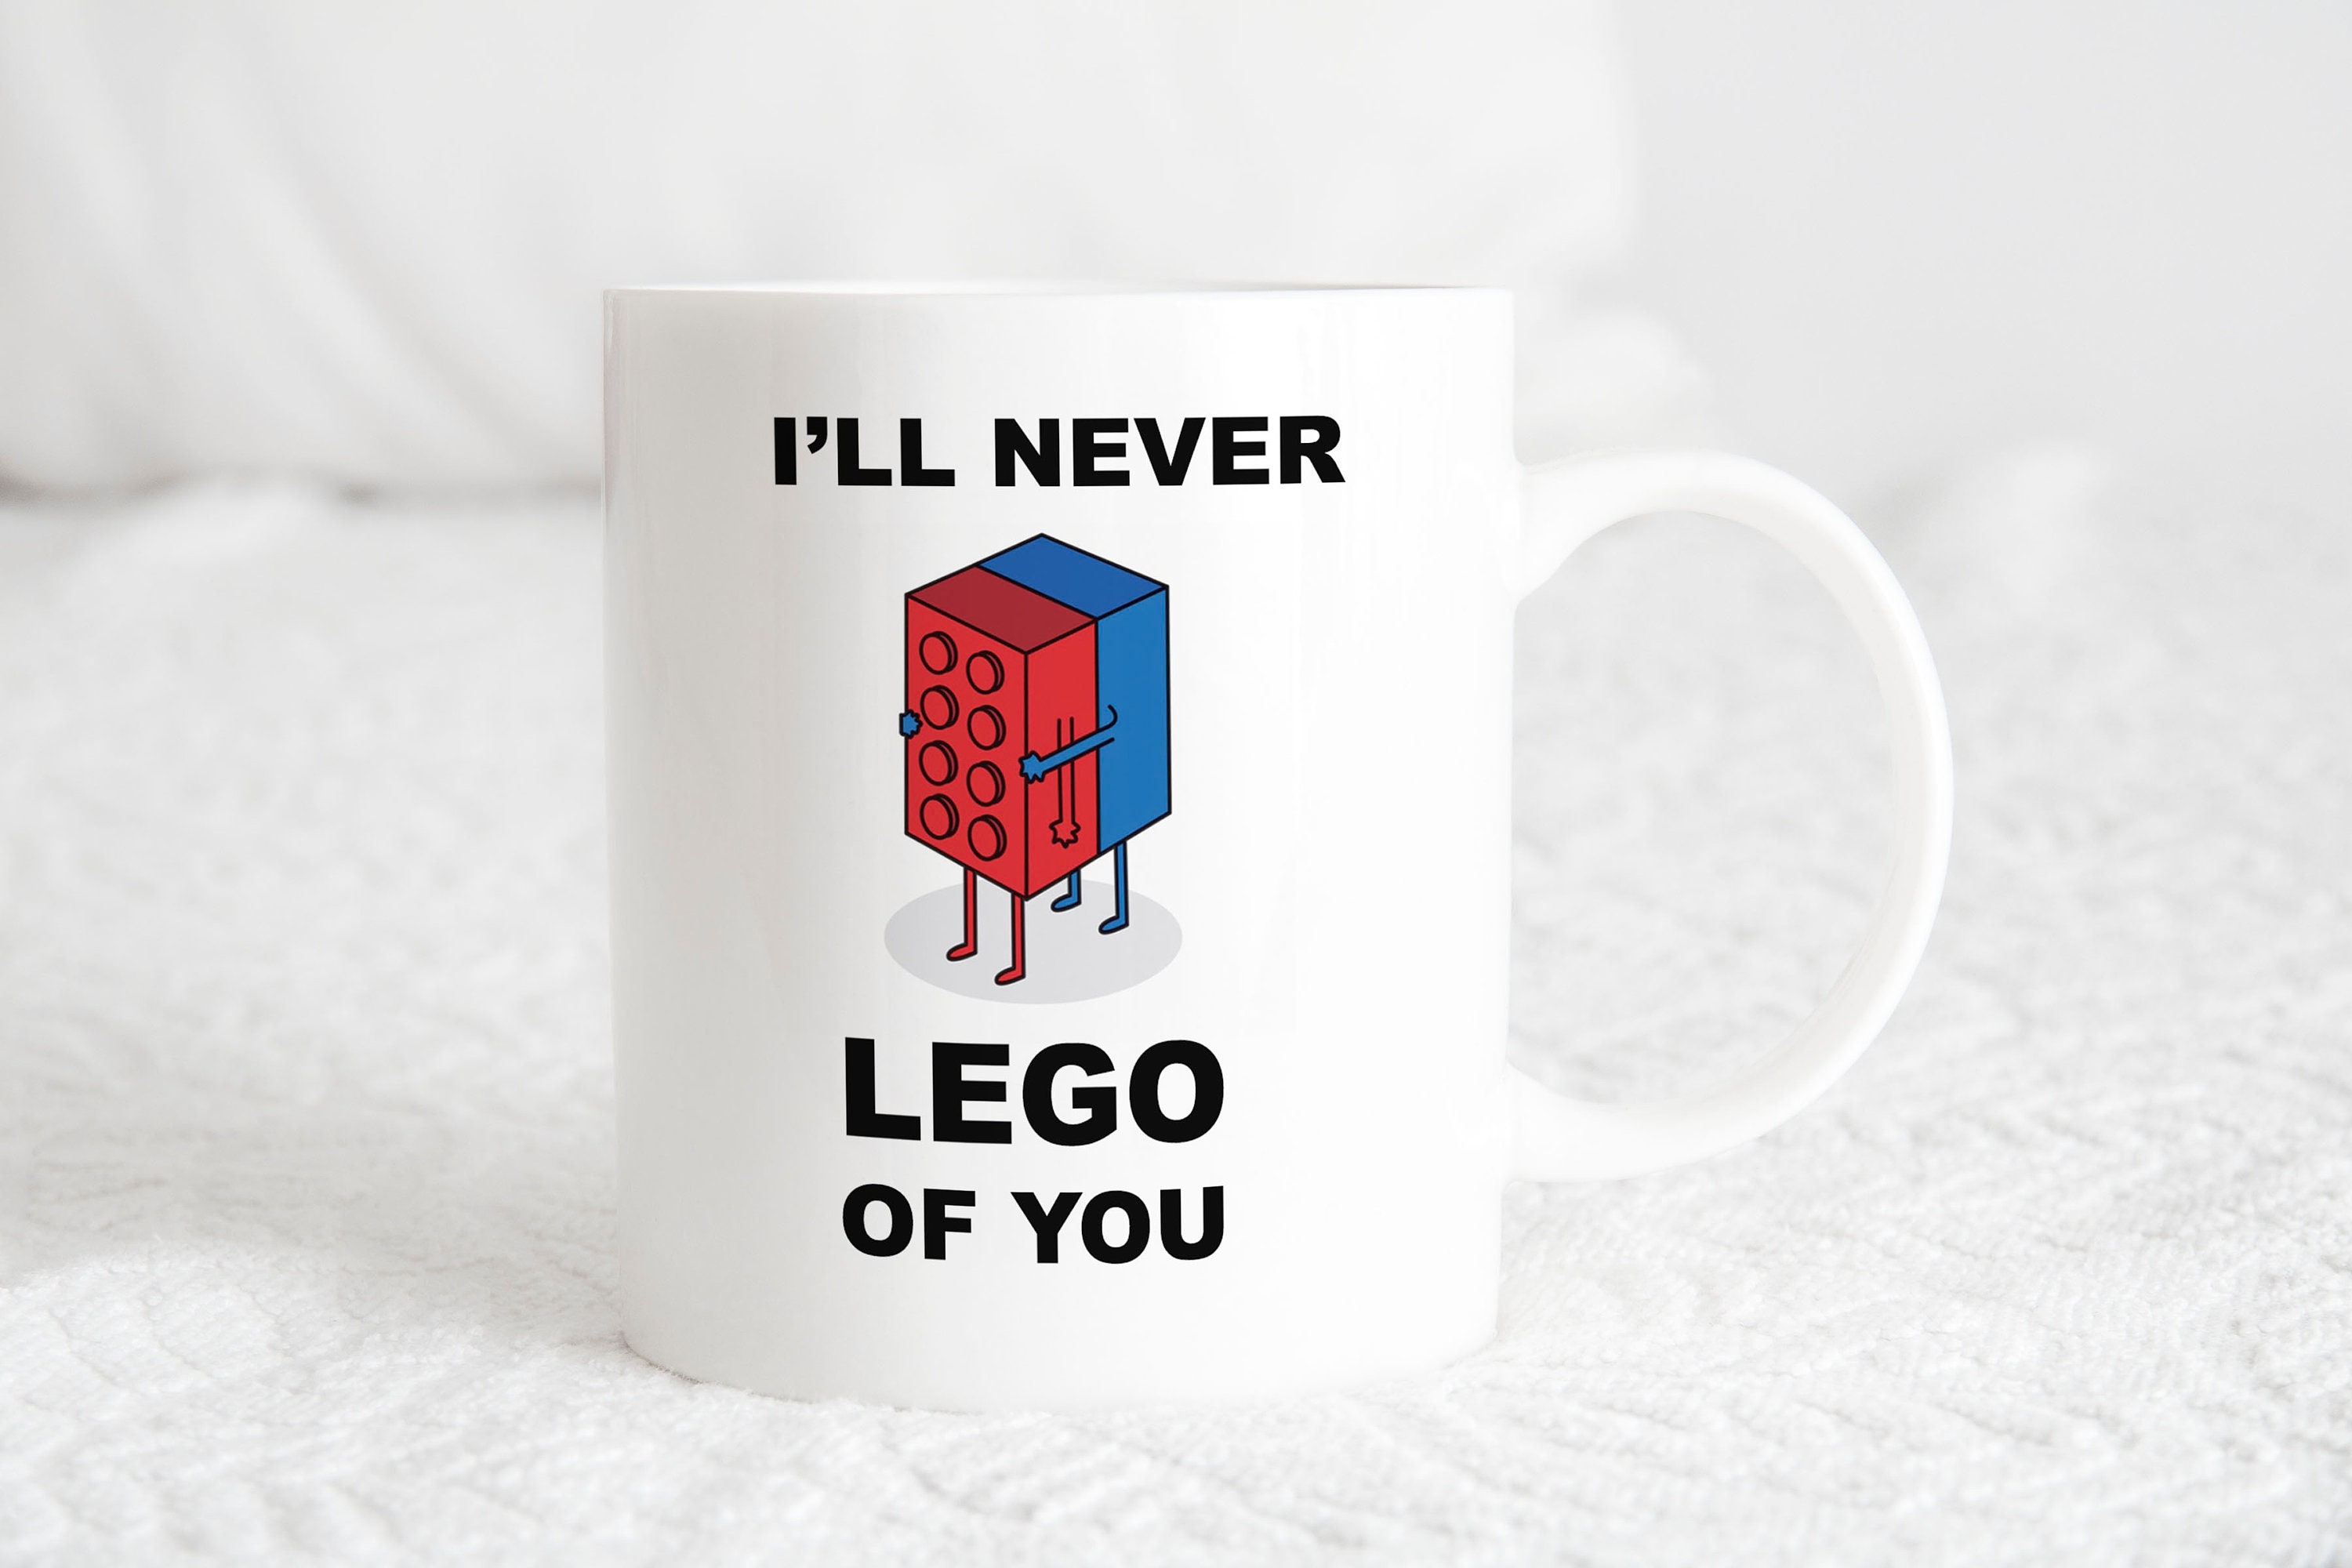 Keep Calm and Build Lego Mug, Best Large Build on Brick Coffee